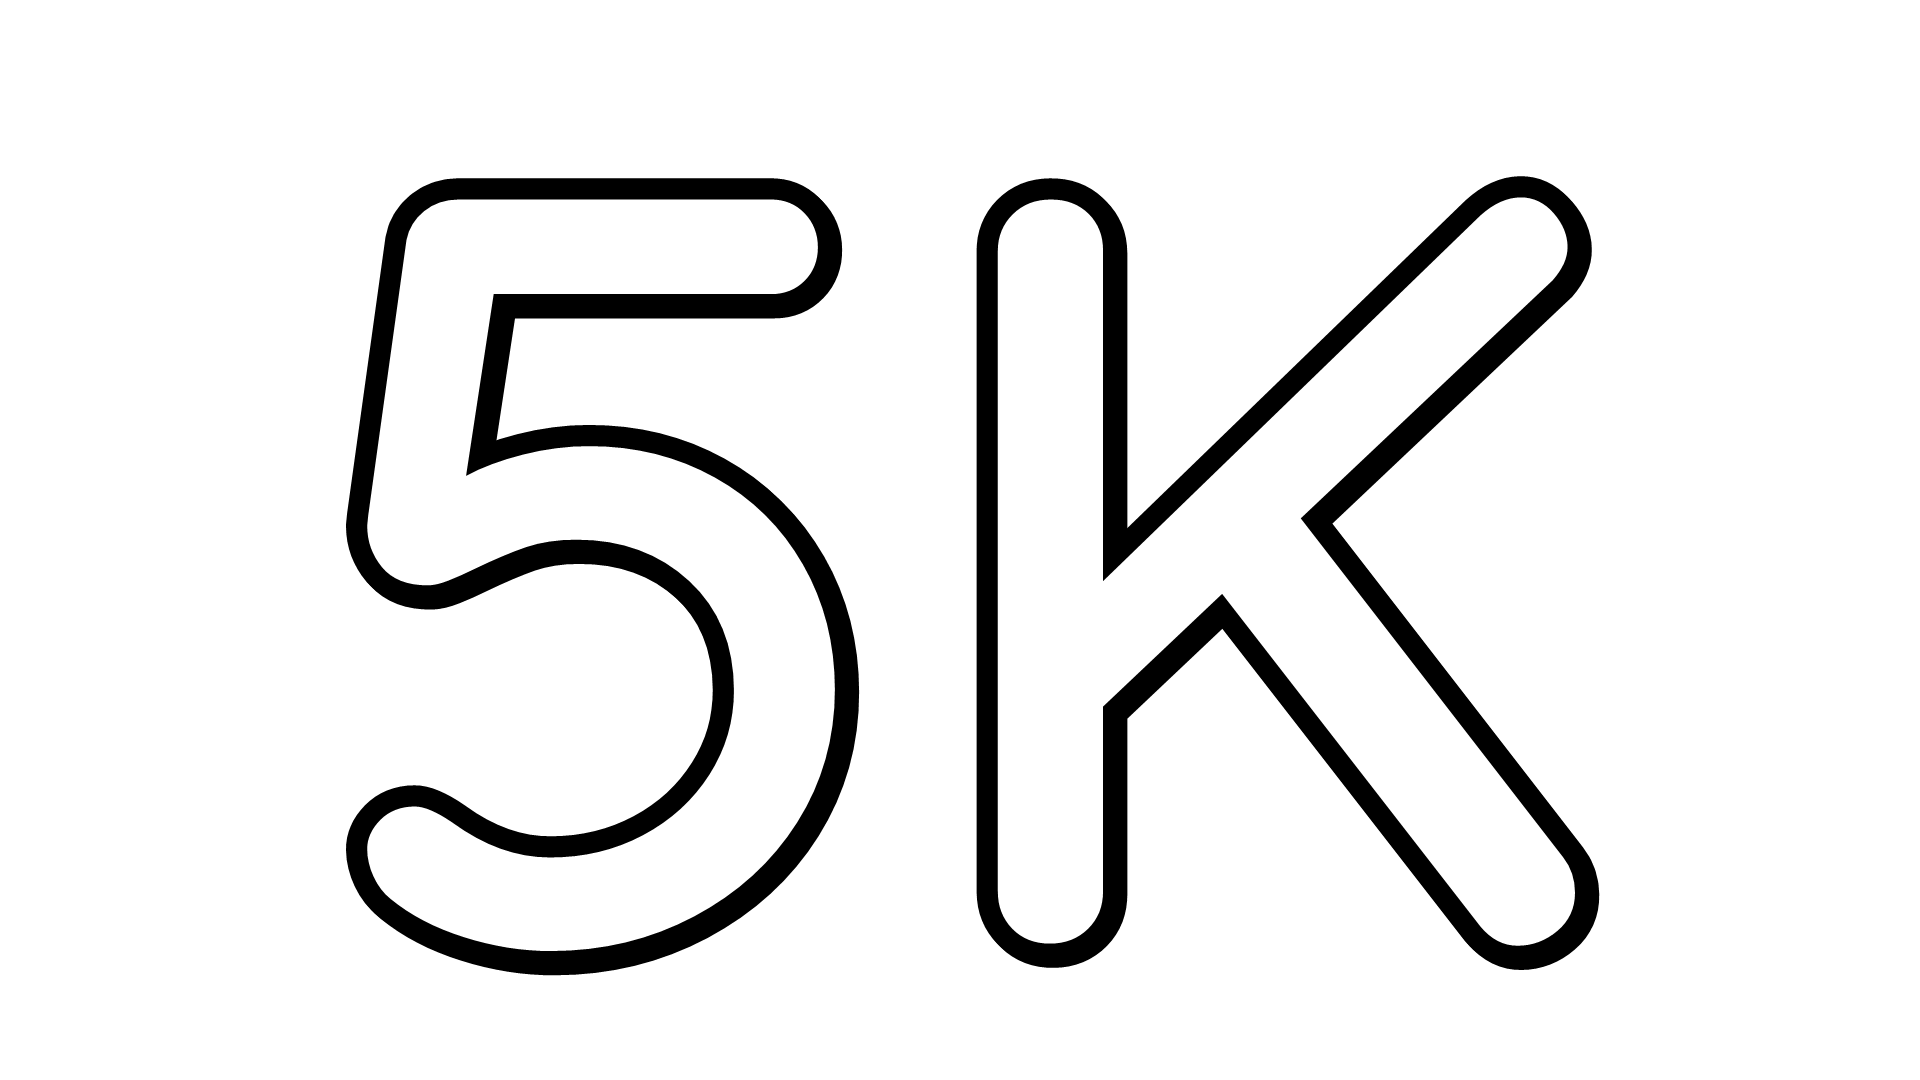 5,000 Subscribers on YouTube!